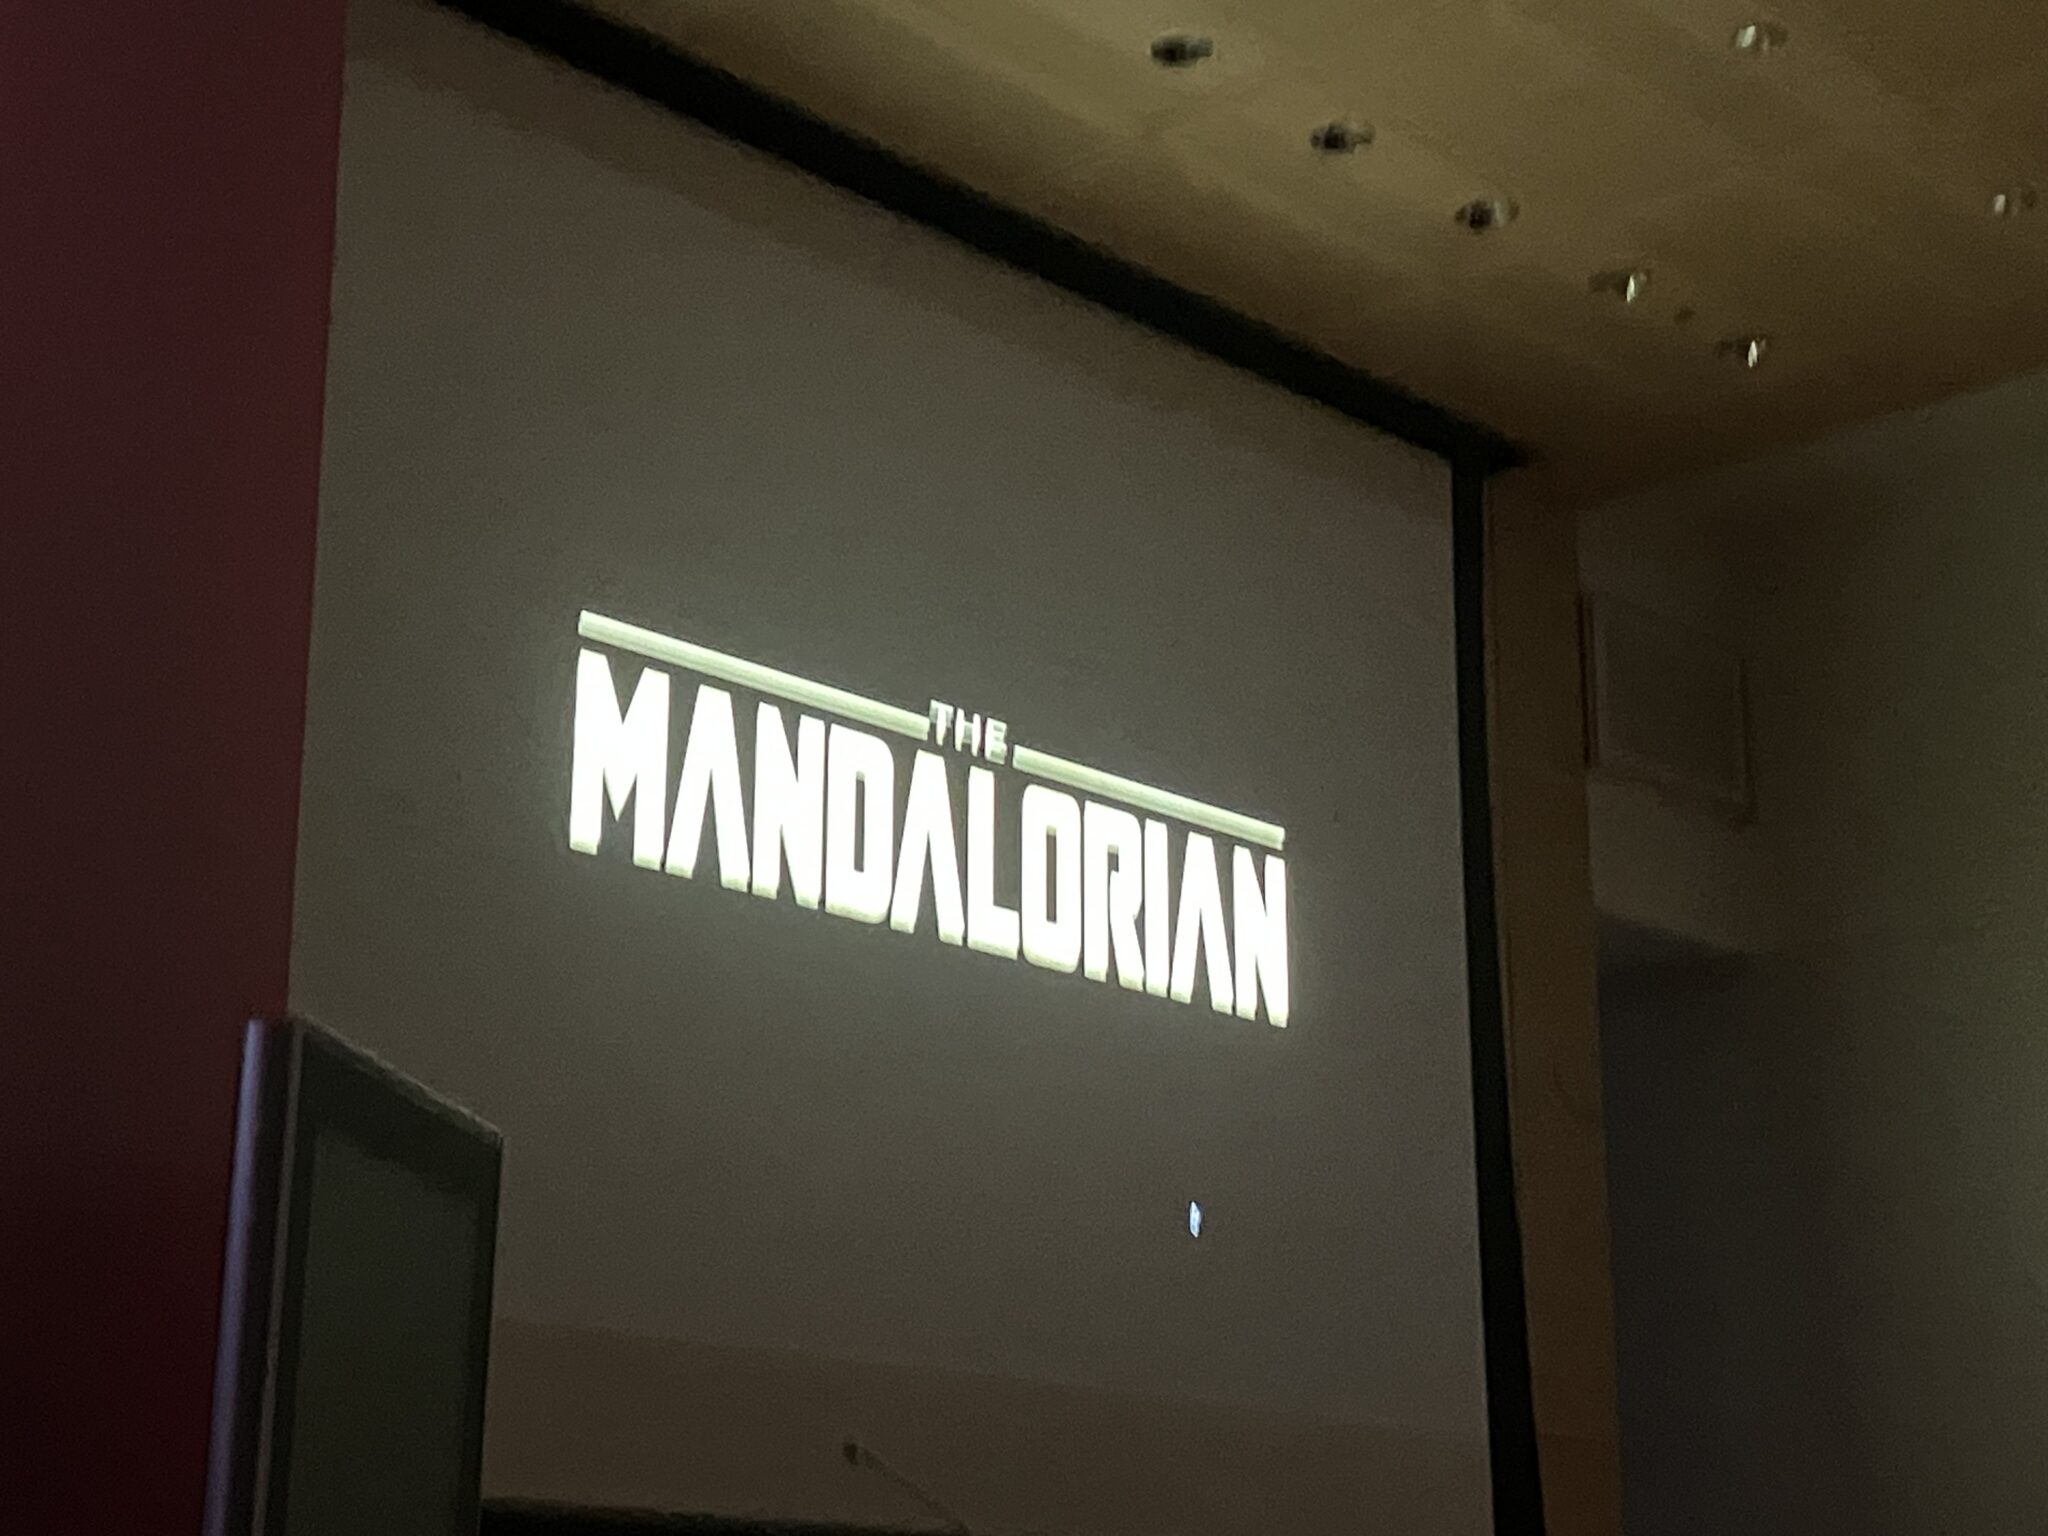 A screen showing "The Mandalorian" title